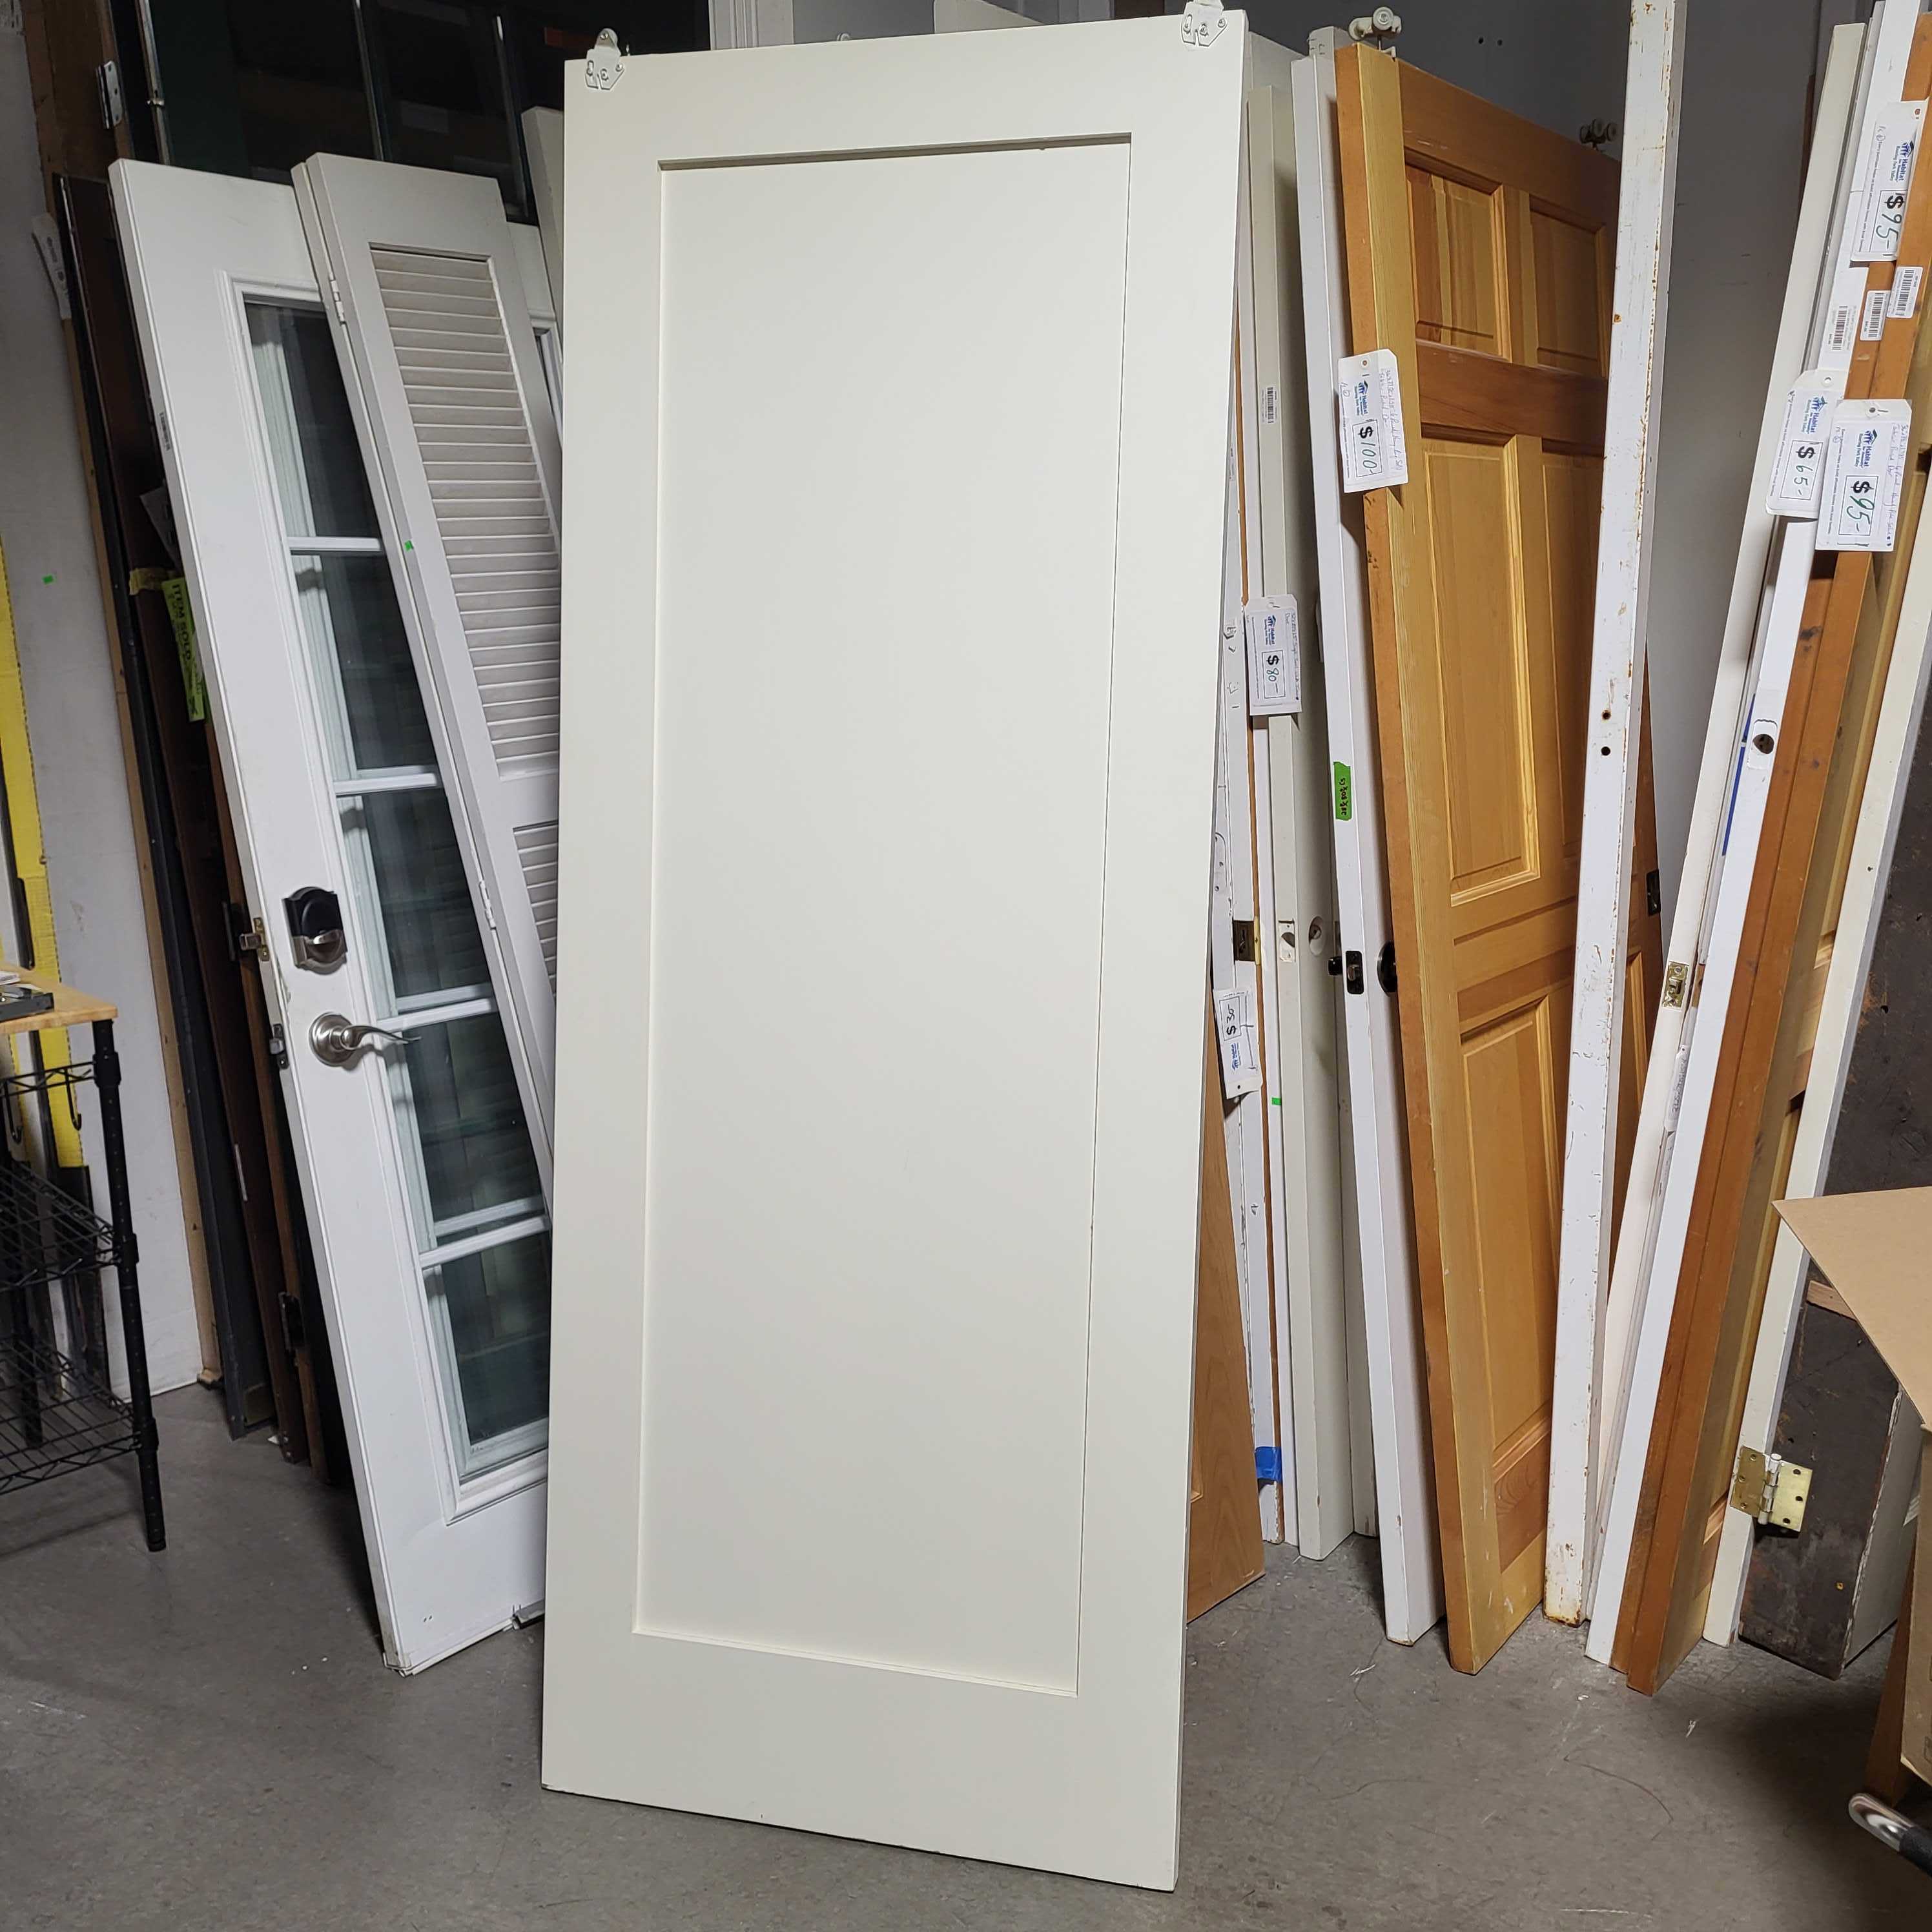 30"x 78.75"x 1.5" Single Panel White Closet Sliding Door